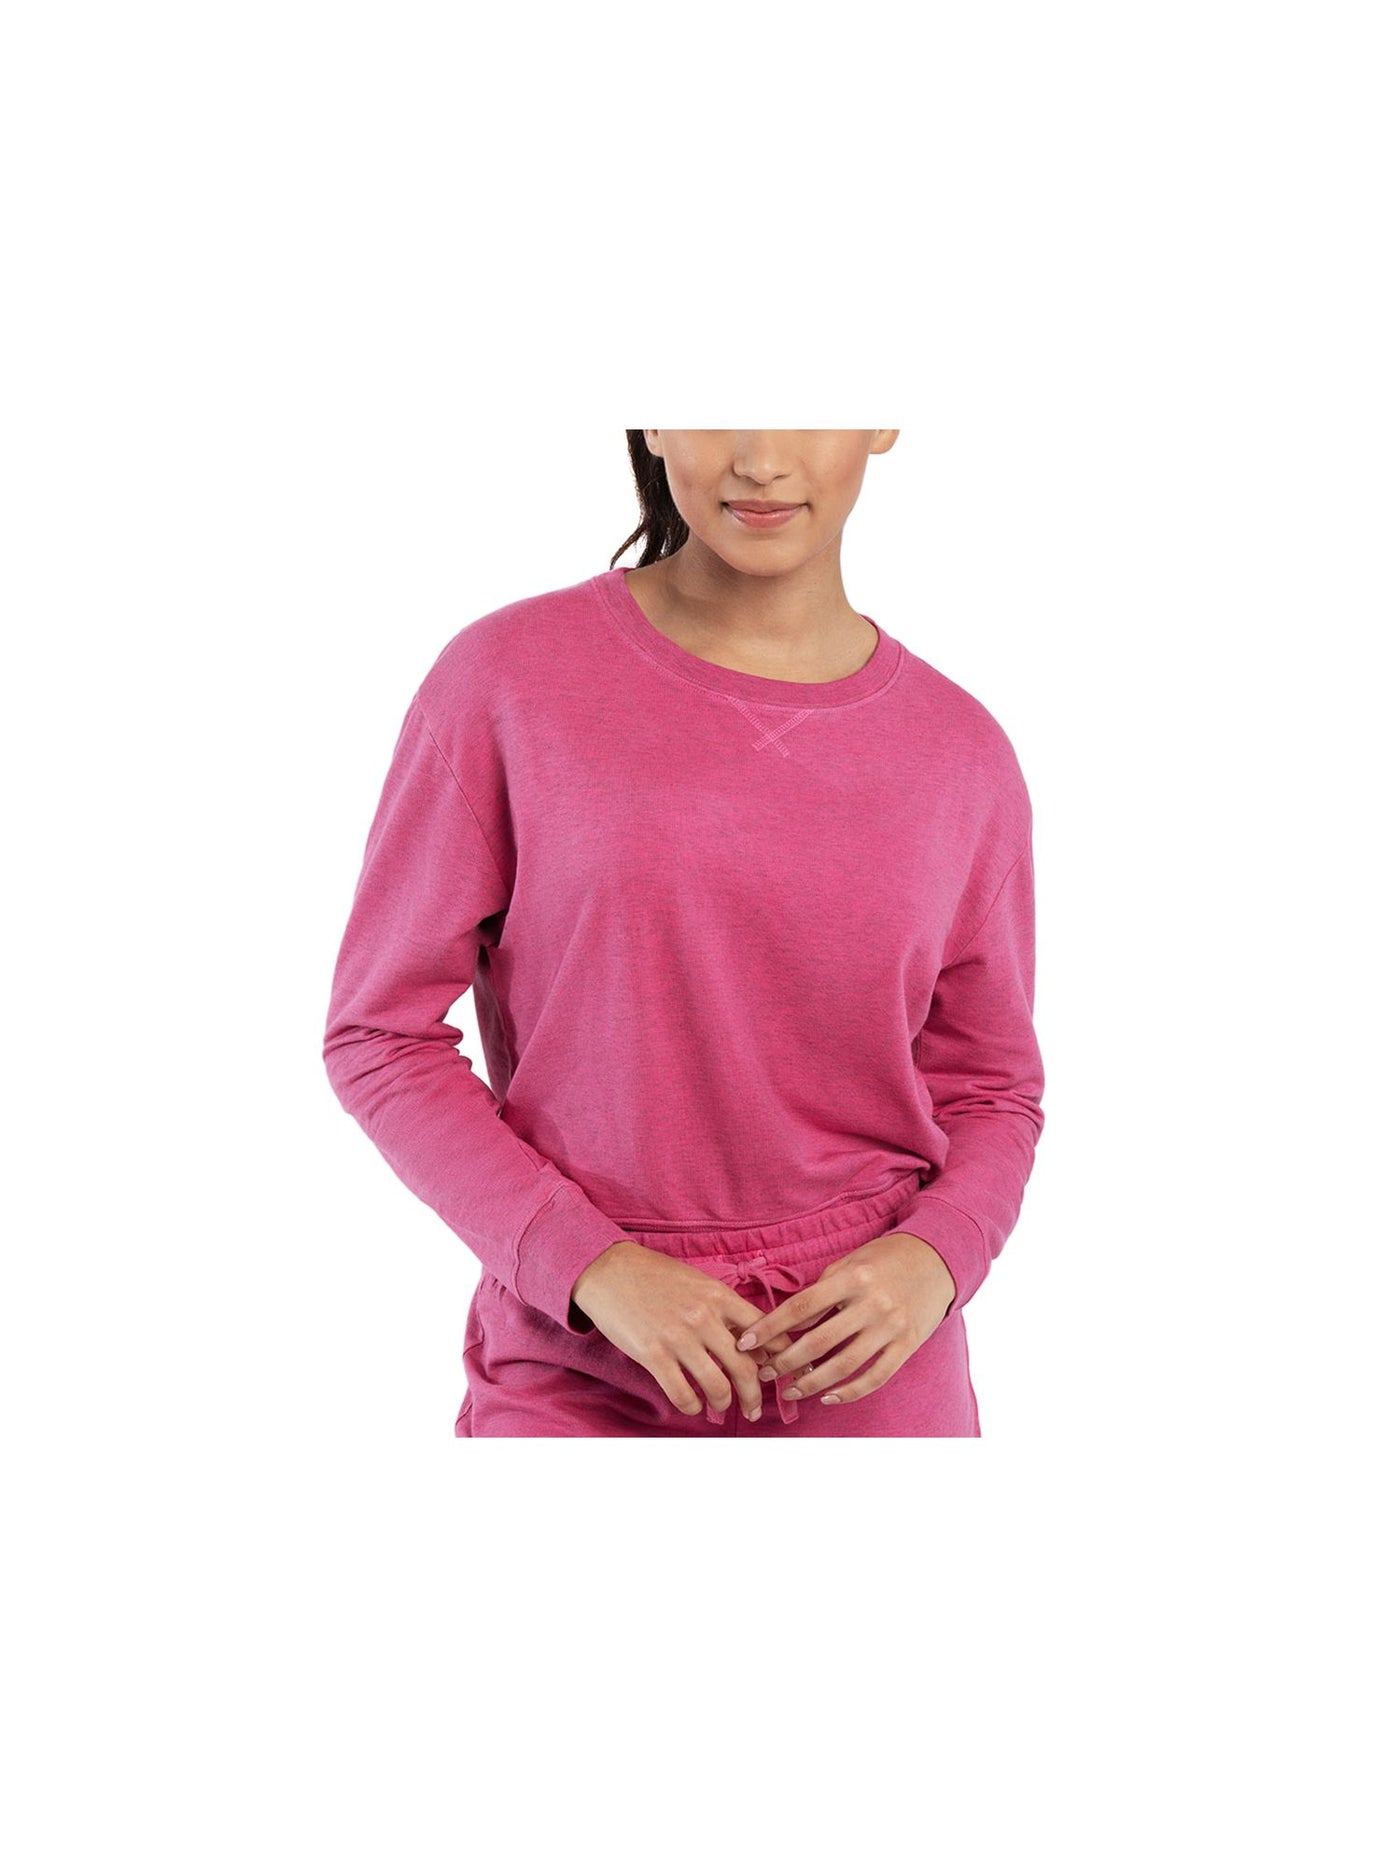 SUNDOWN BY SPLENDID Womens Pink Heather Long Sleeve Crew Neck Sweatshirt M